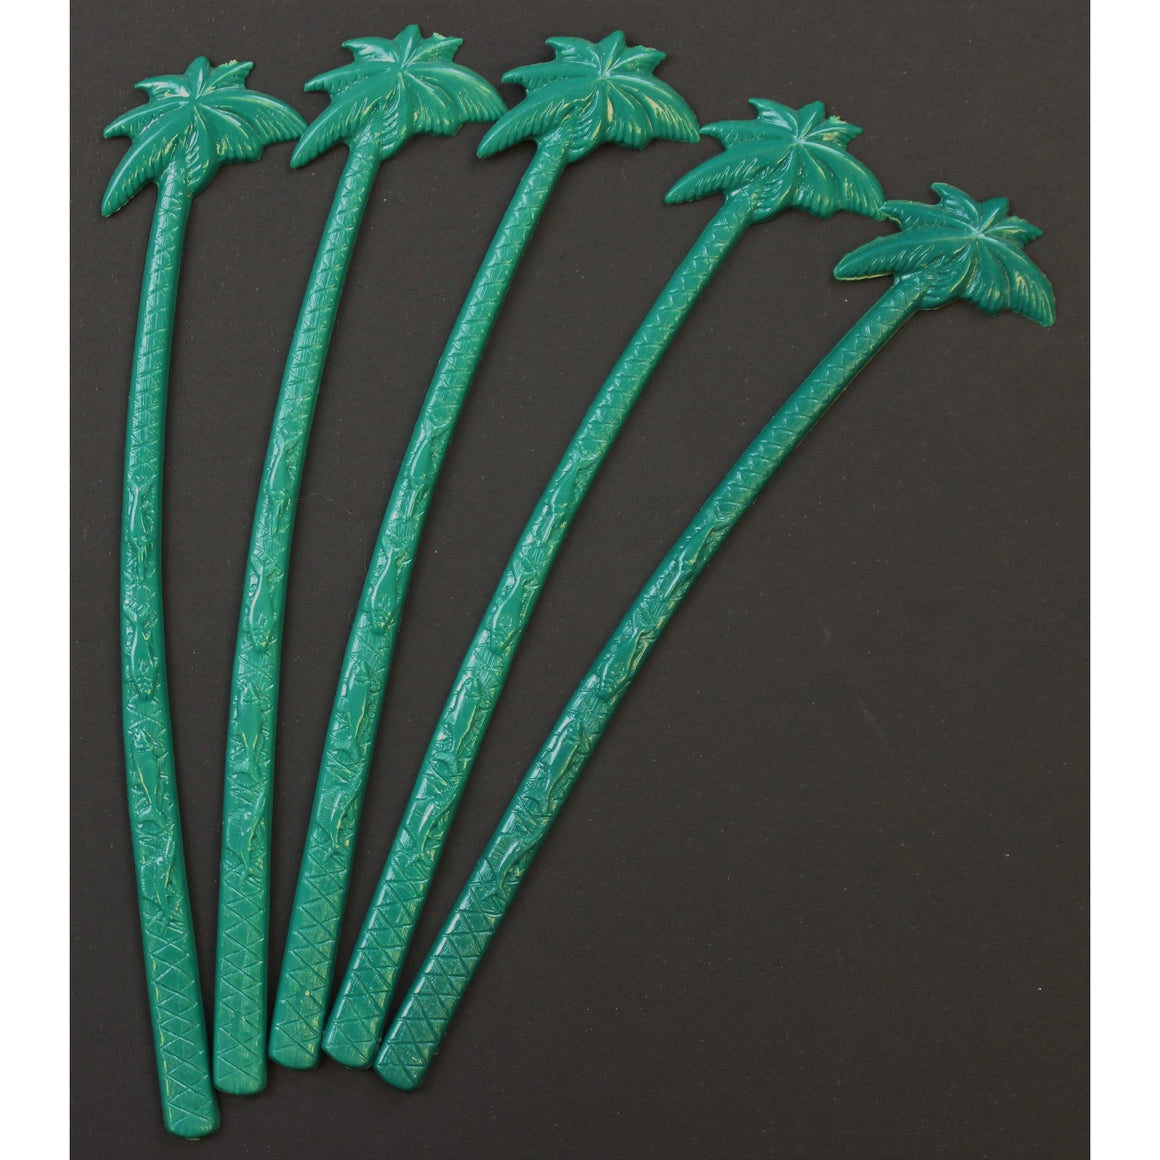 Set of 5 Condado Beach Palm Tree Swizzle Sticks